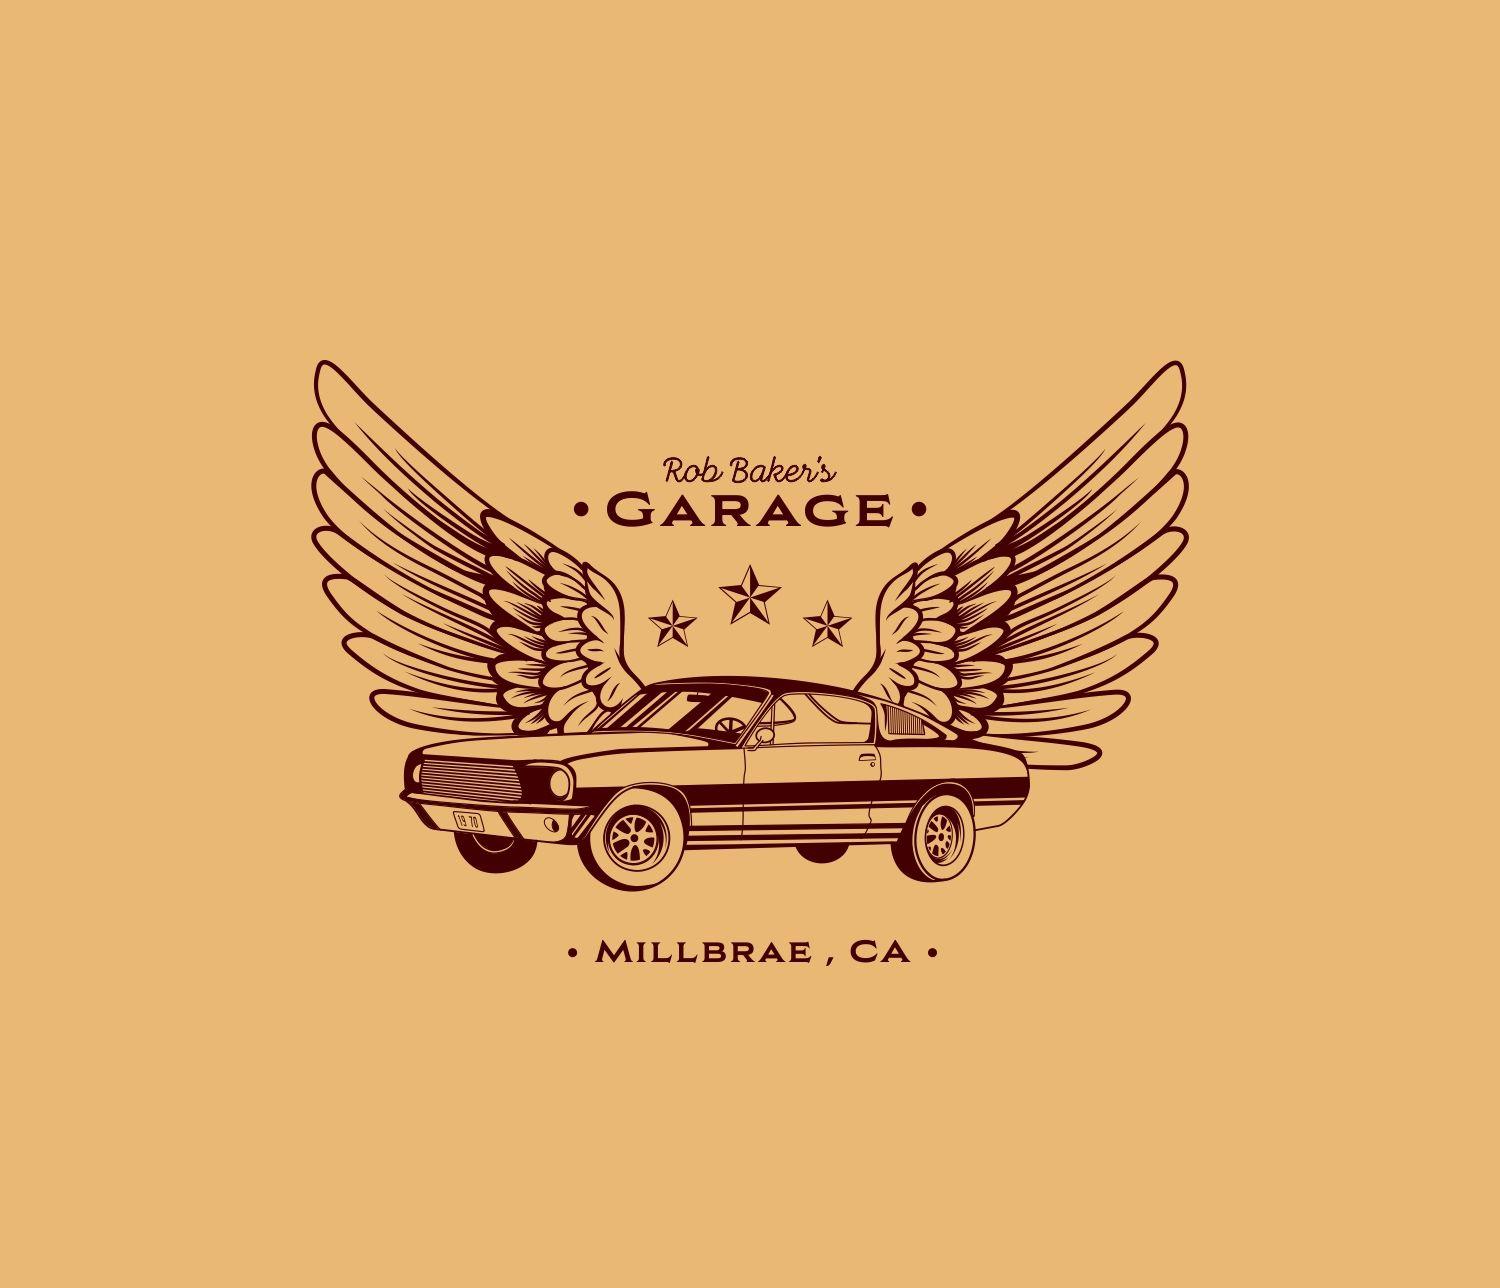 Personal Garage Logo - Bold, Playful Logo Design for Rob Baker's Garage Millbrae ,CA by ...